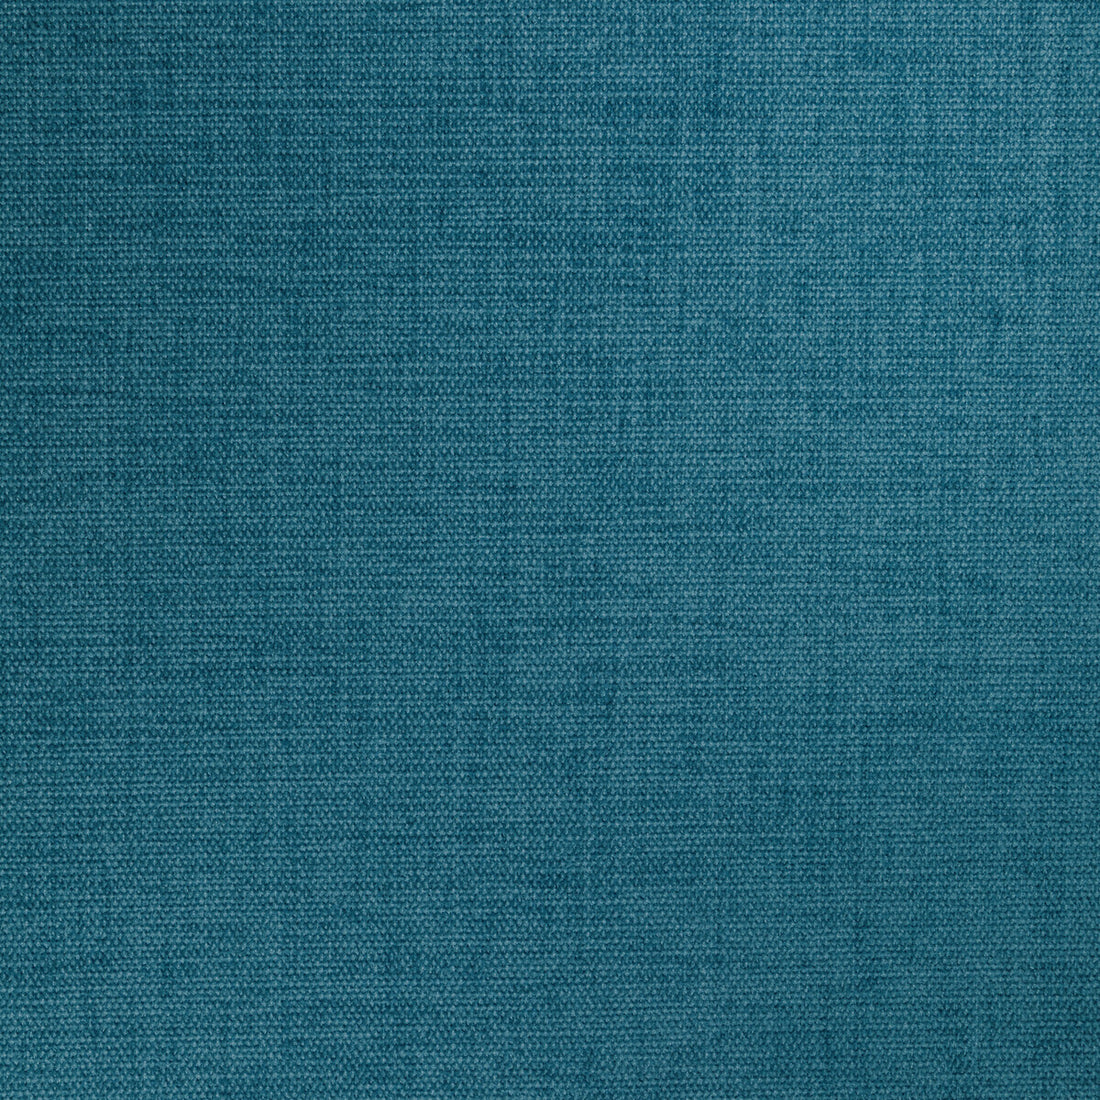 Kravet Smart fabric in 34959-55 color - pattern 34959.55.0 - by Kravet Smart in the Performance Kravetarmor collection